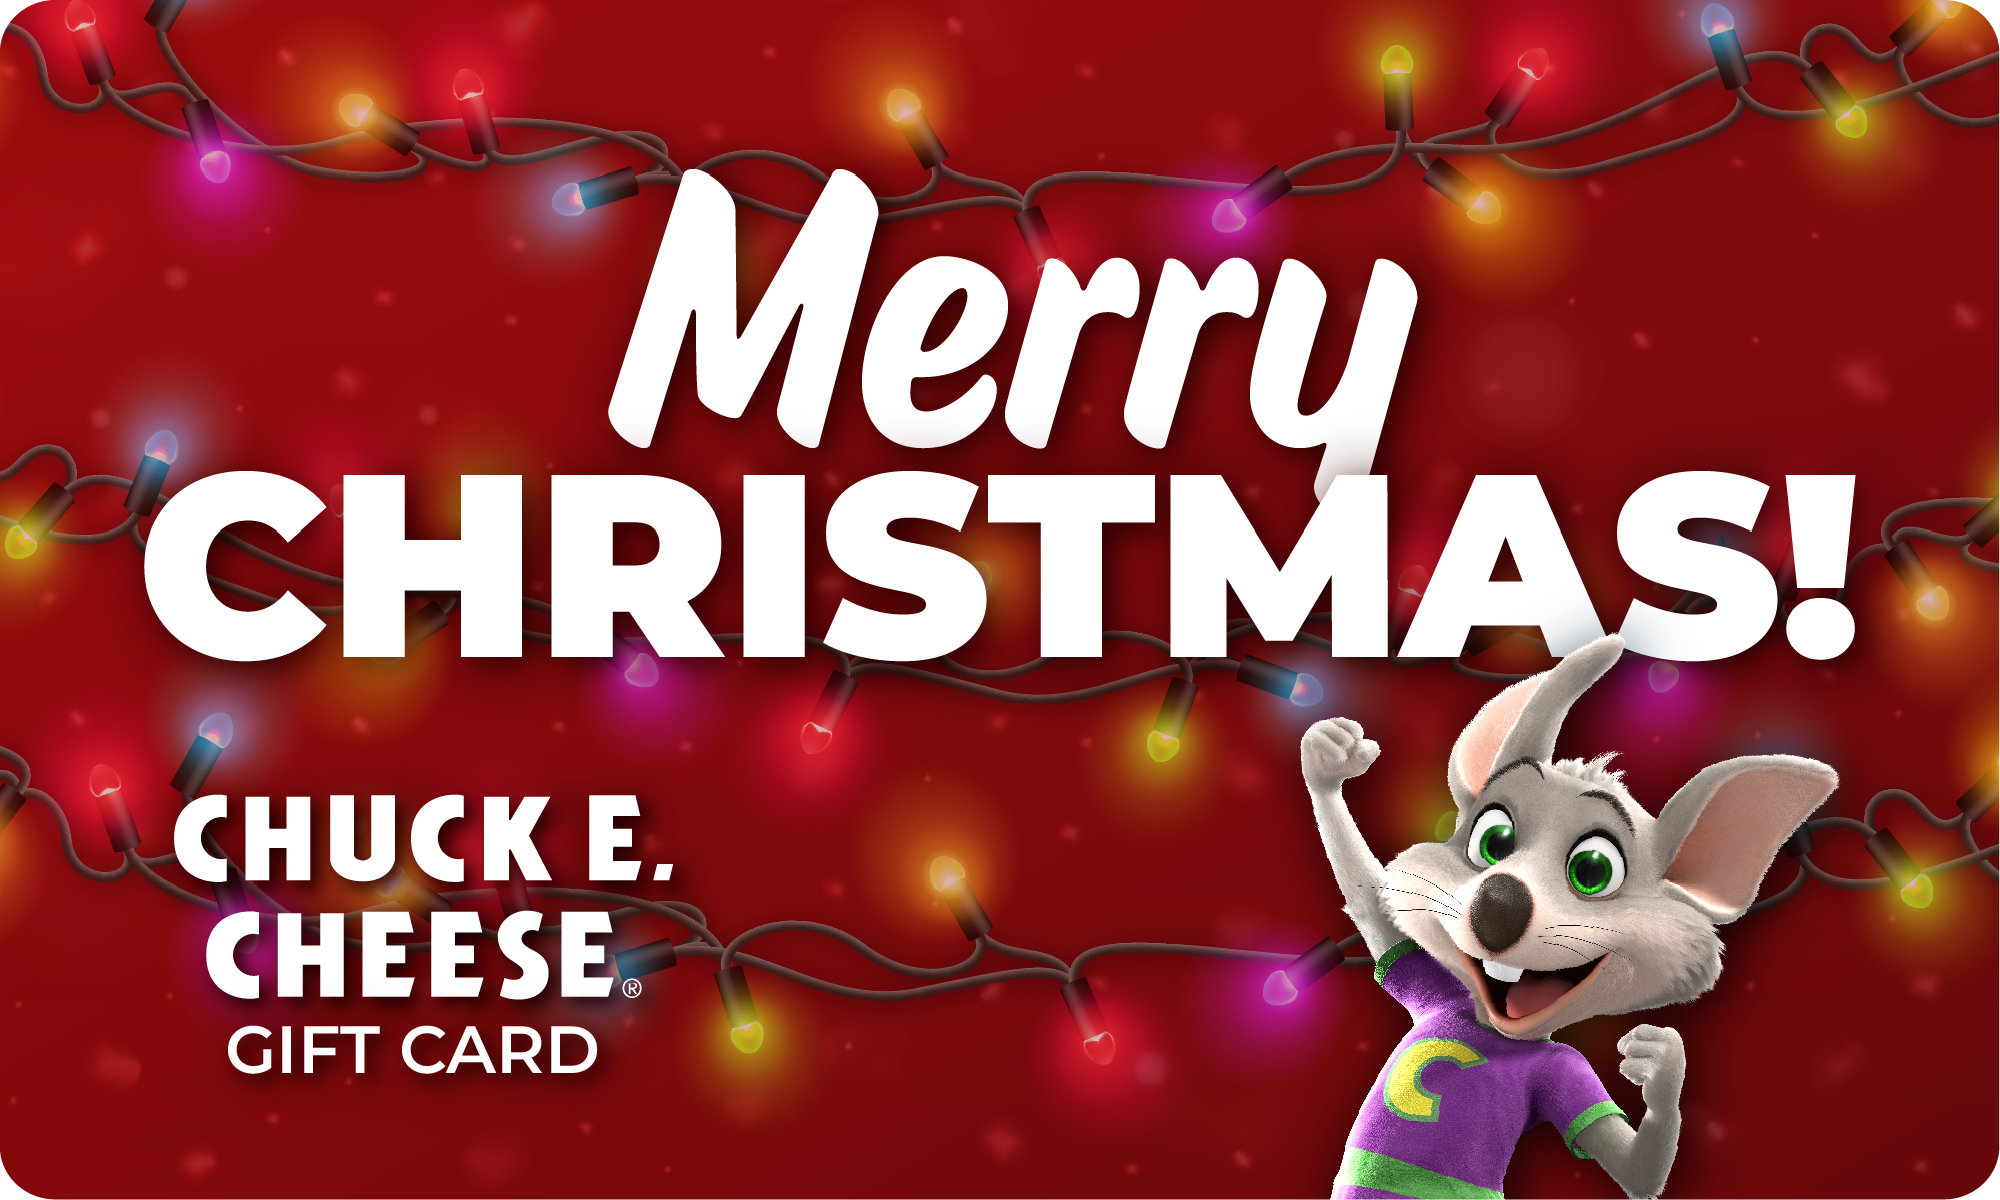 Merry Christmas! Gift Card